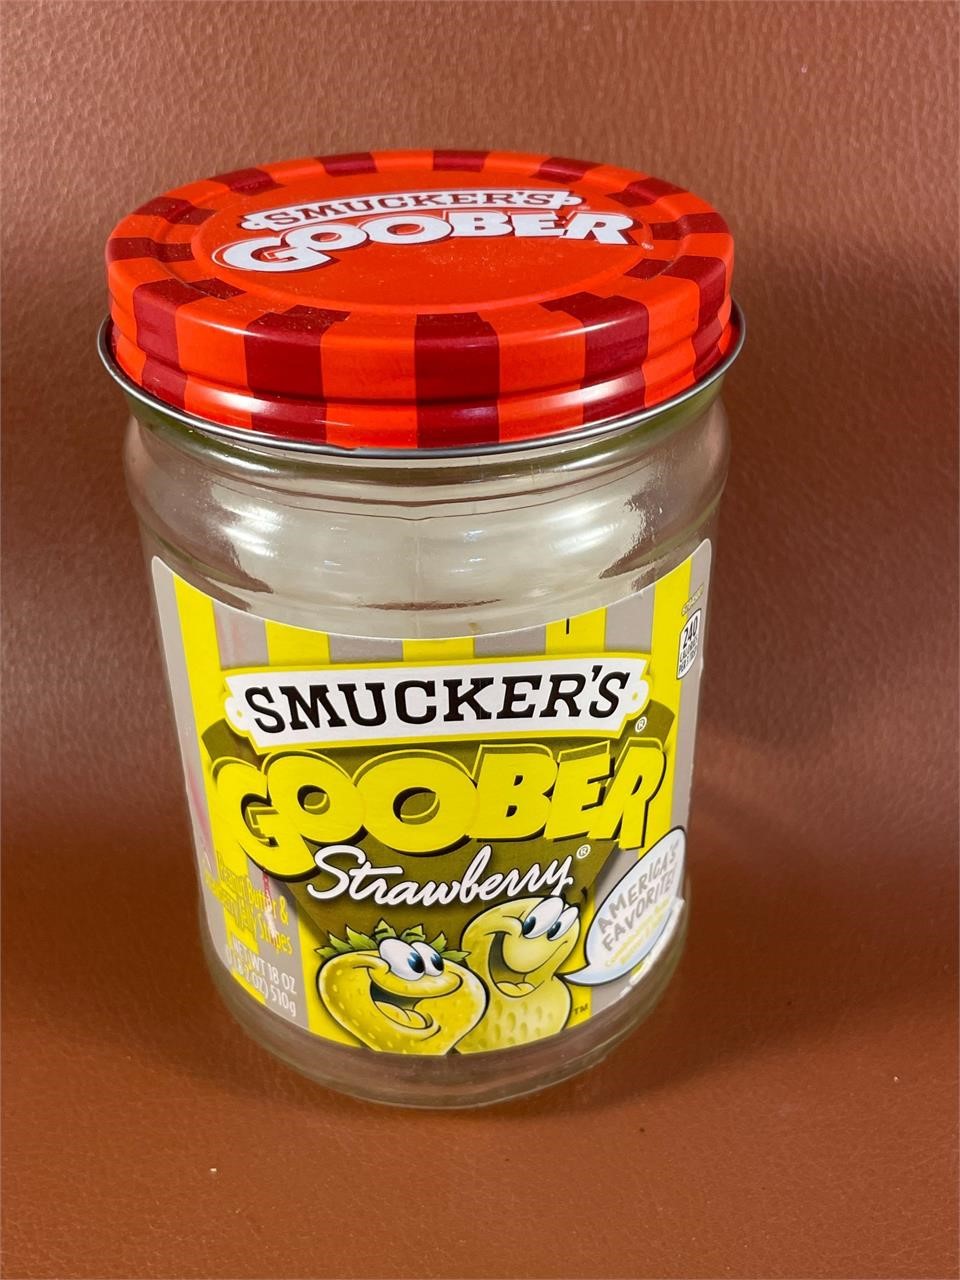 Smucker's Goober Jar